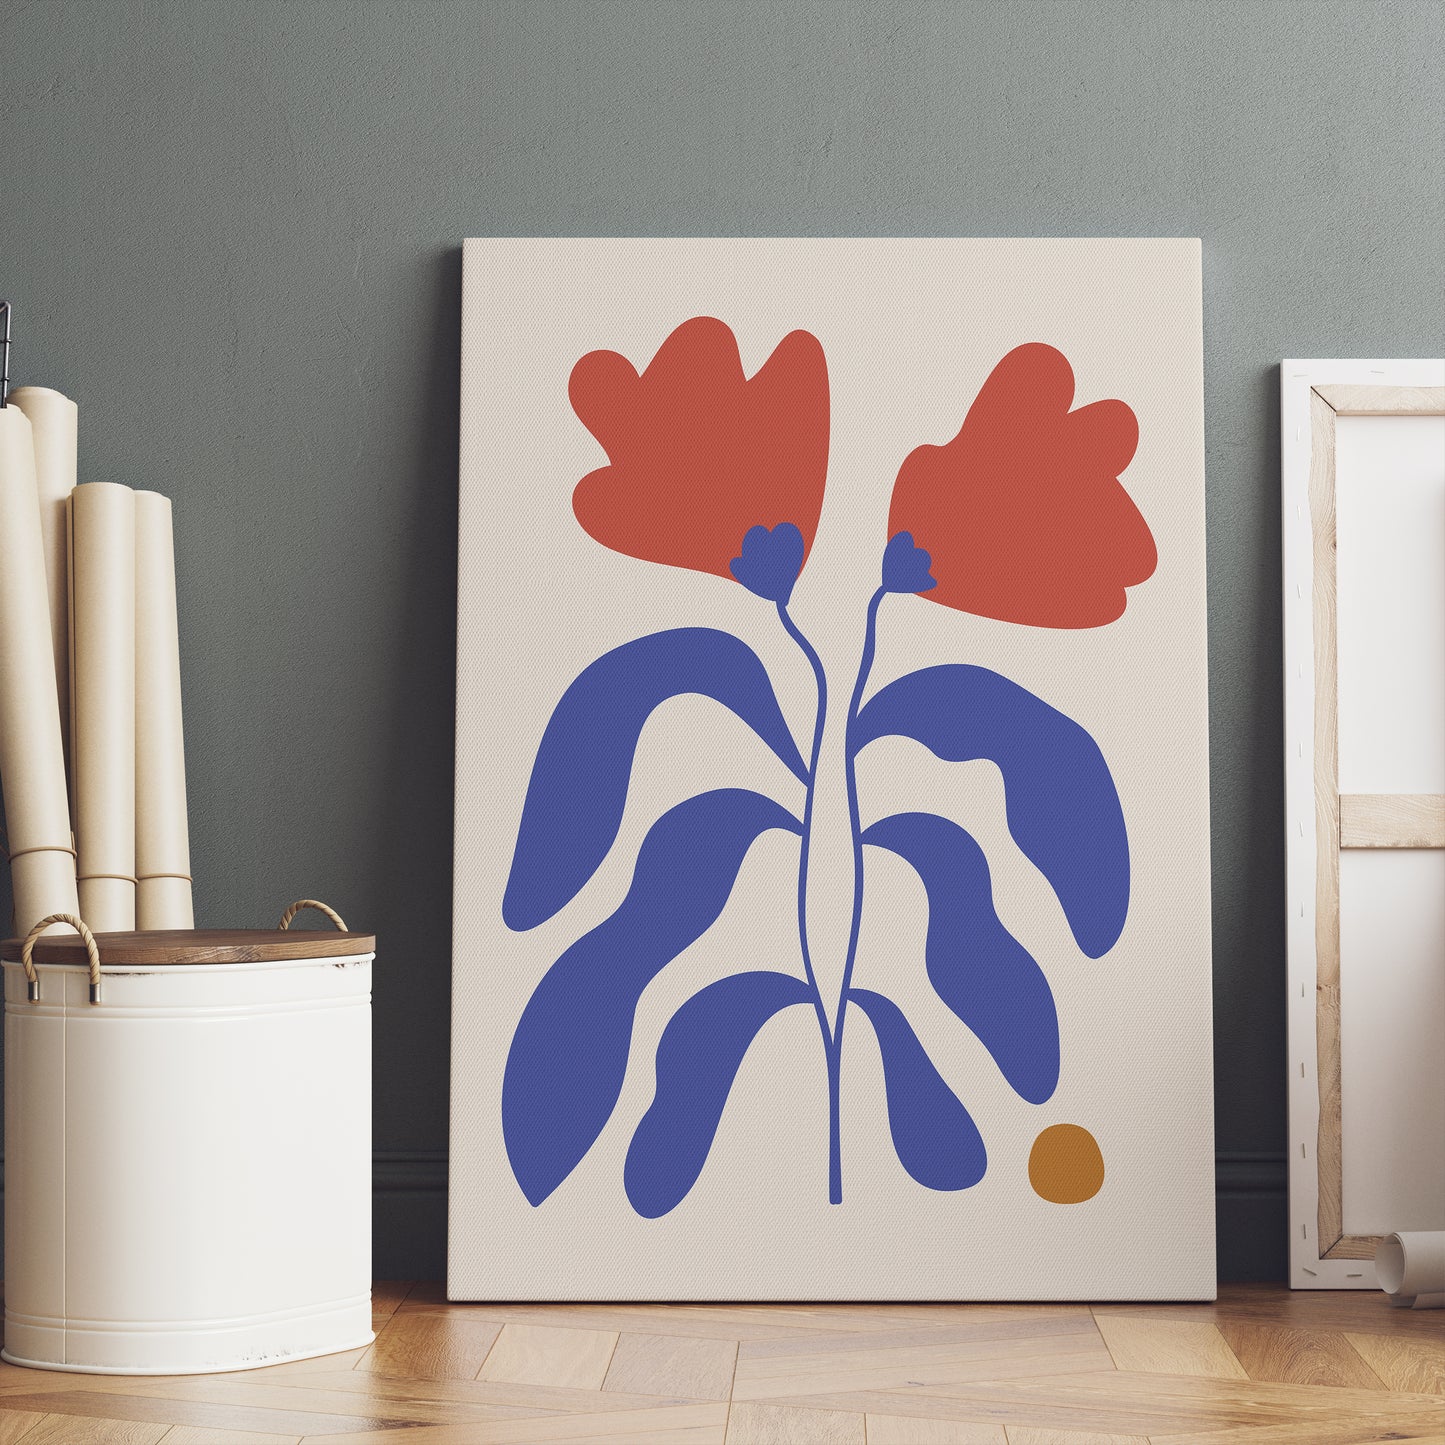 Minimalist Abstract Flowers Print on Canvas